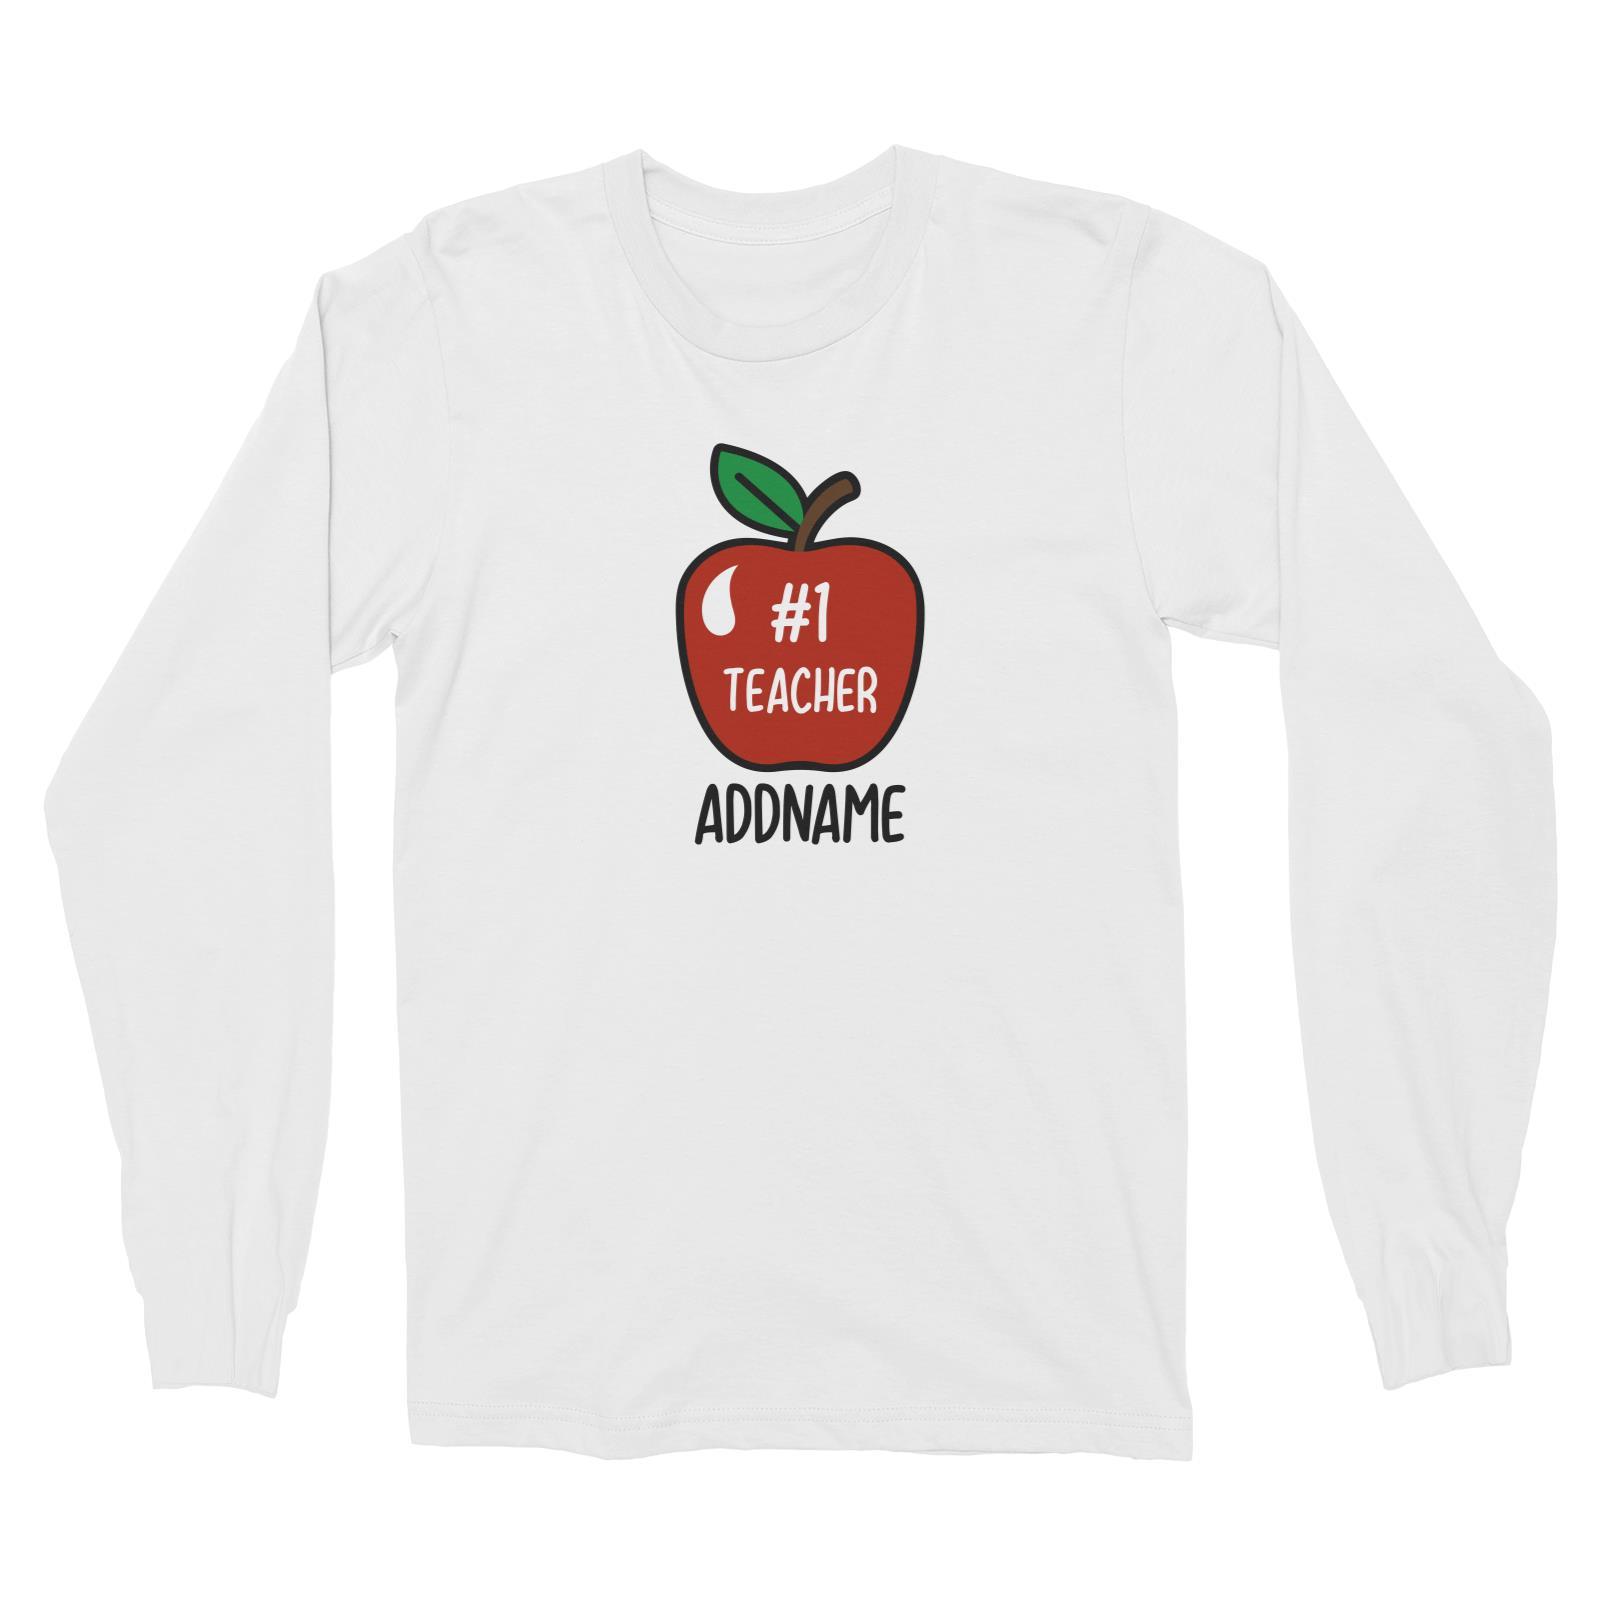 Teacher Addname Big Red Apple Hashtag 1 Teacher Addname Long Sleeve Unisex T-Shirt